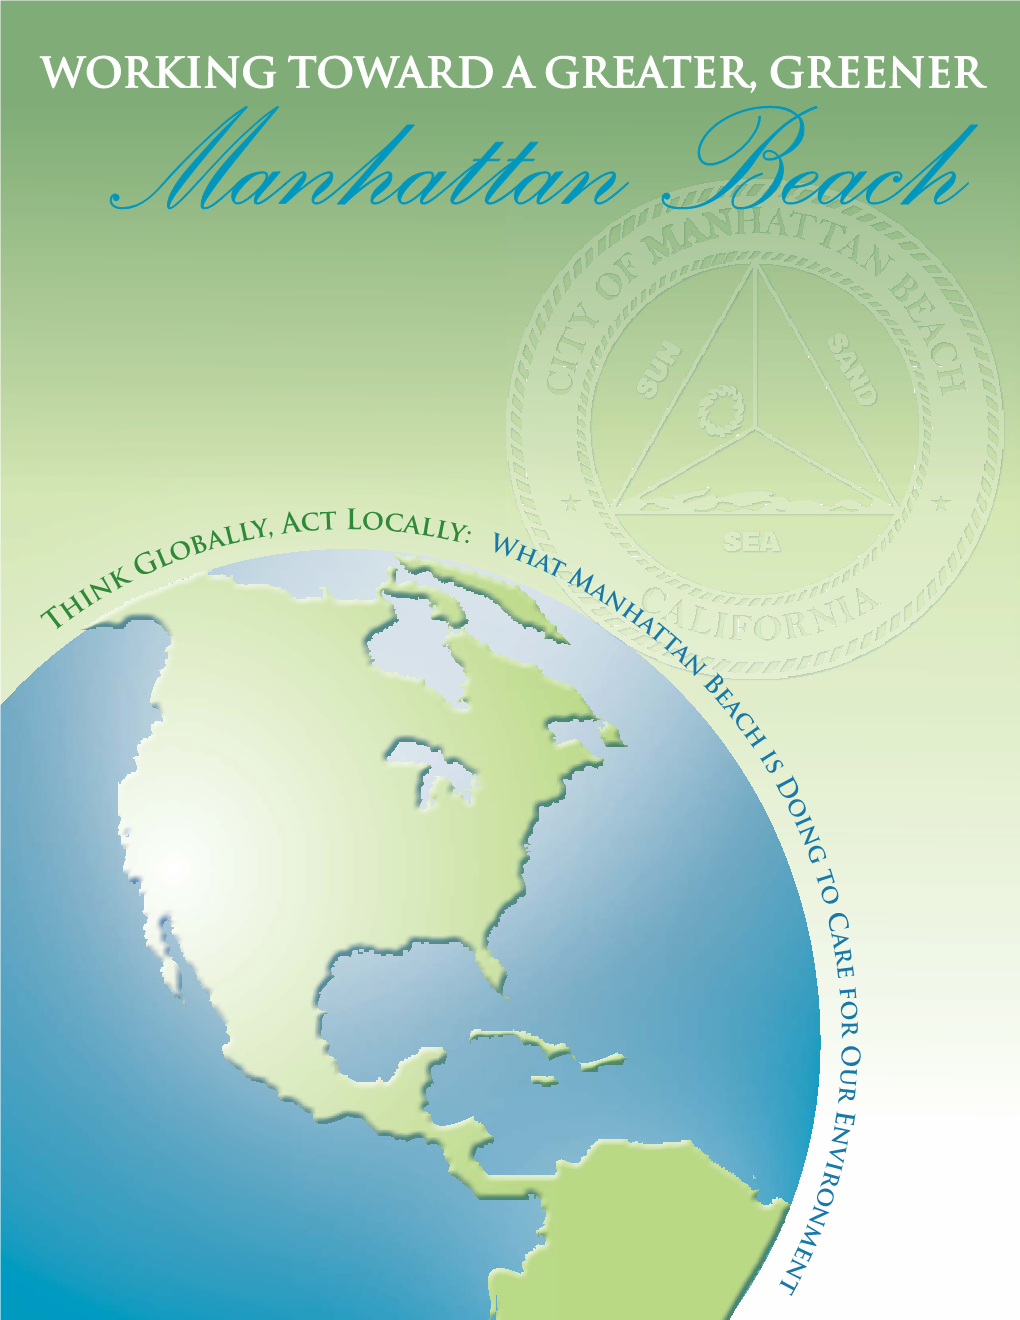 Working Toward a Greater, Greener Manhattan Beach (The Green Book)